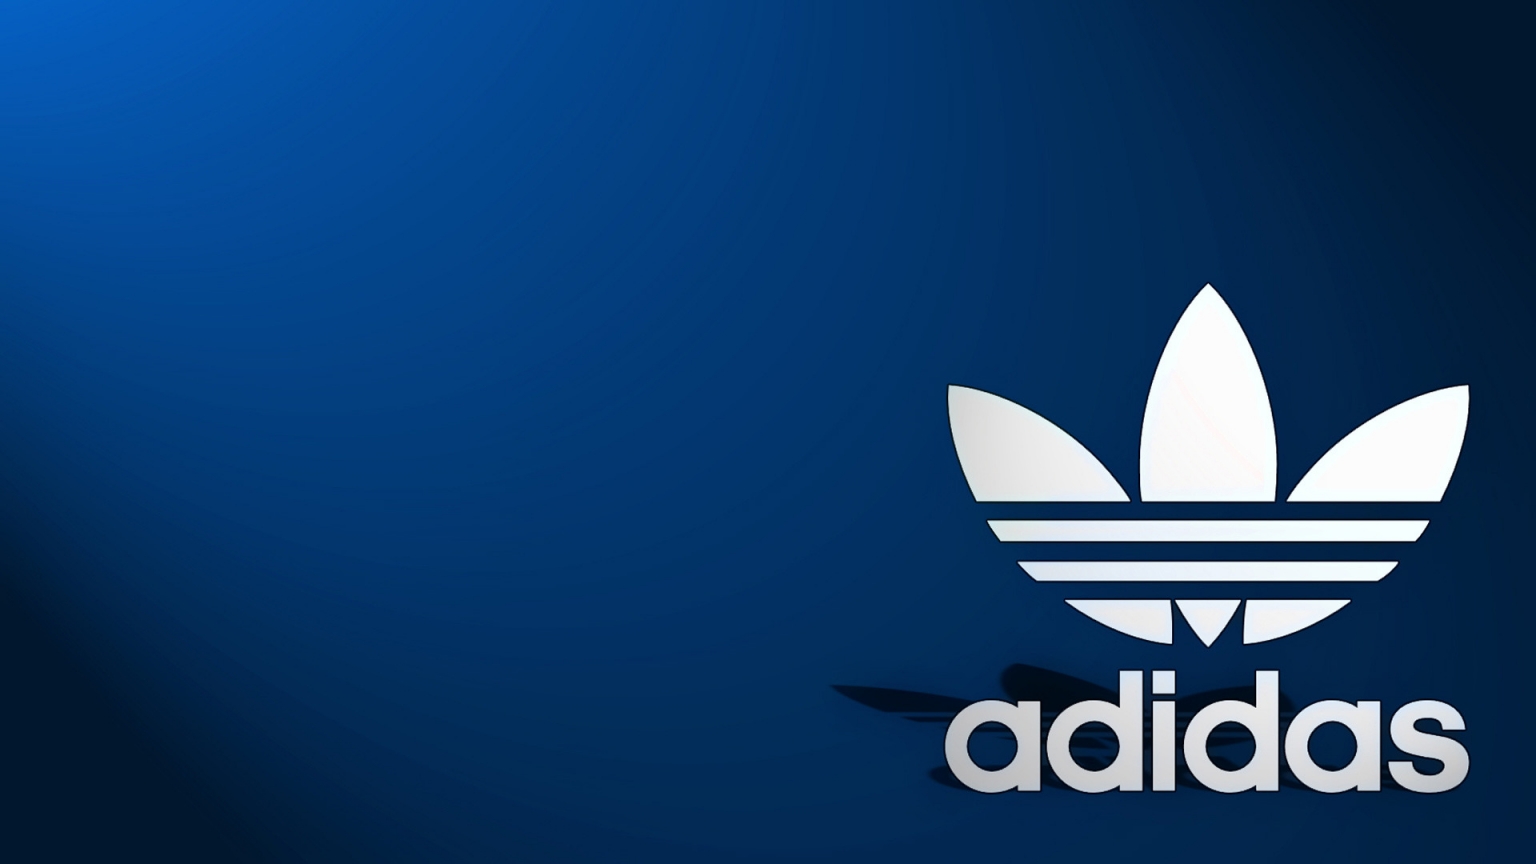 Adidas Logo Blue Background for 1536 x 864 HDTV resolution